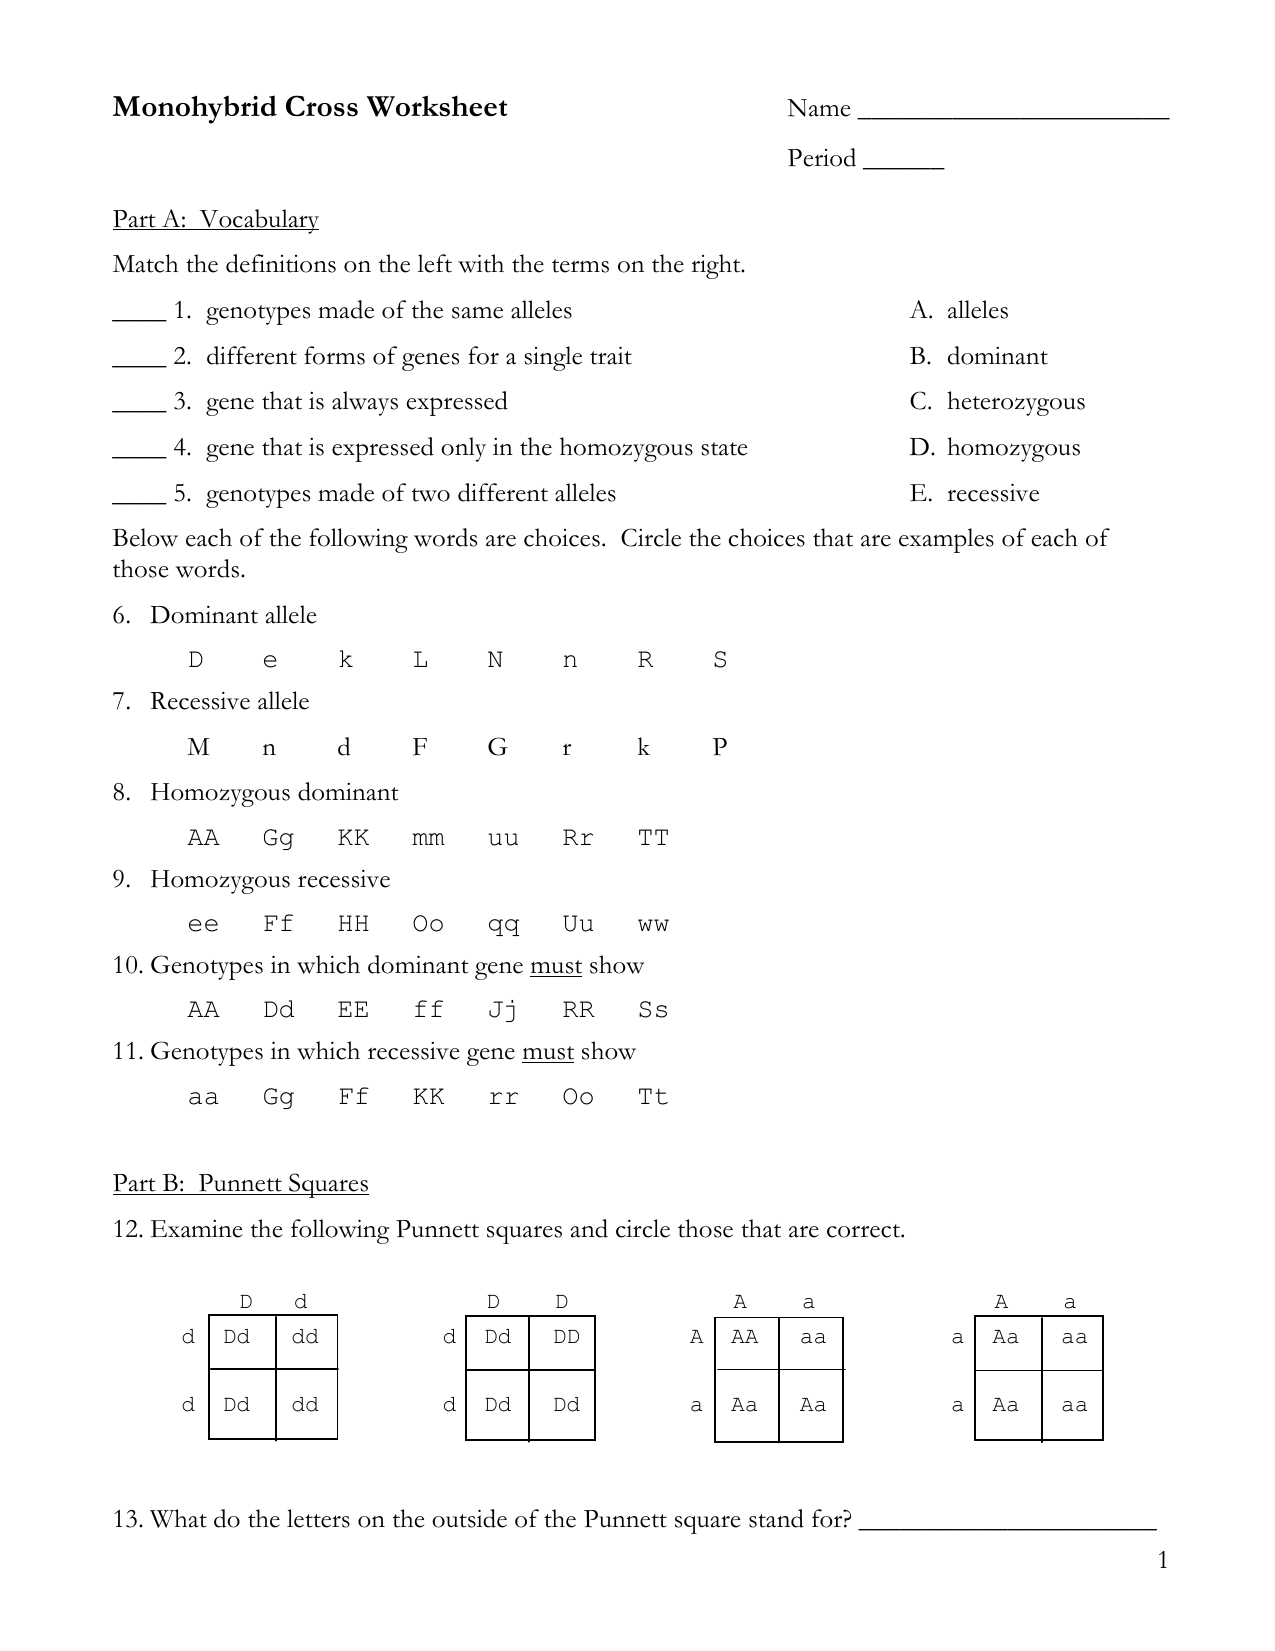 Monohybrid-Cross-Homework-11 With Monohybrid Crosses Worksheet Answers